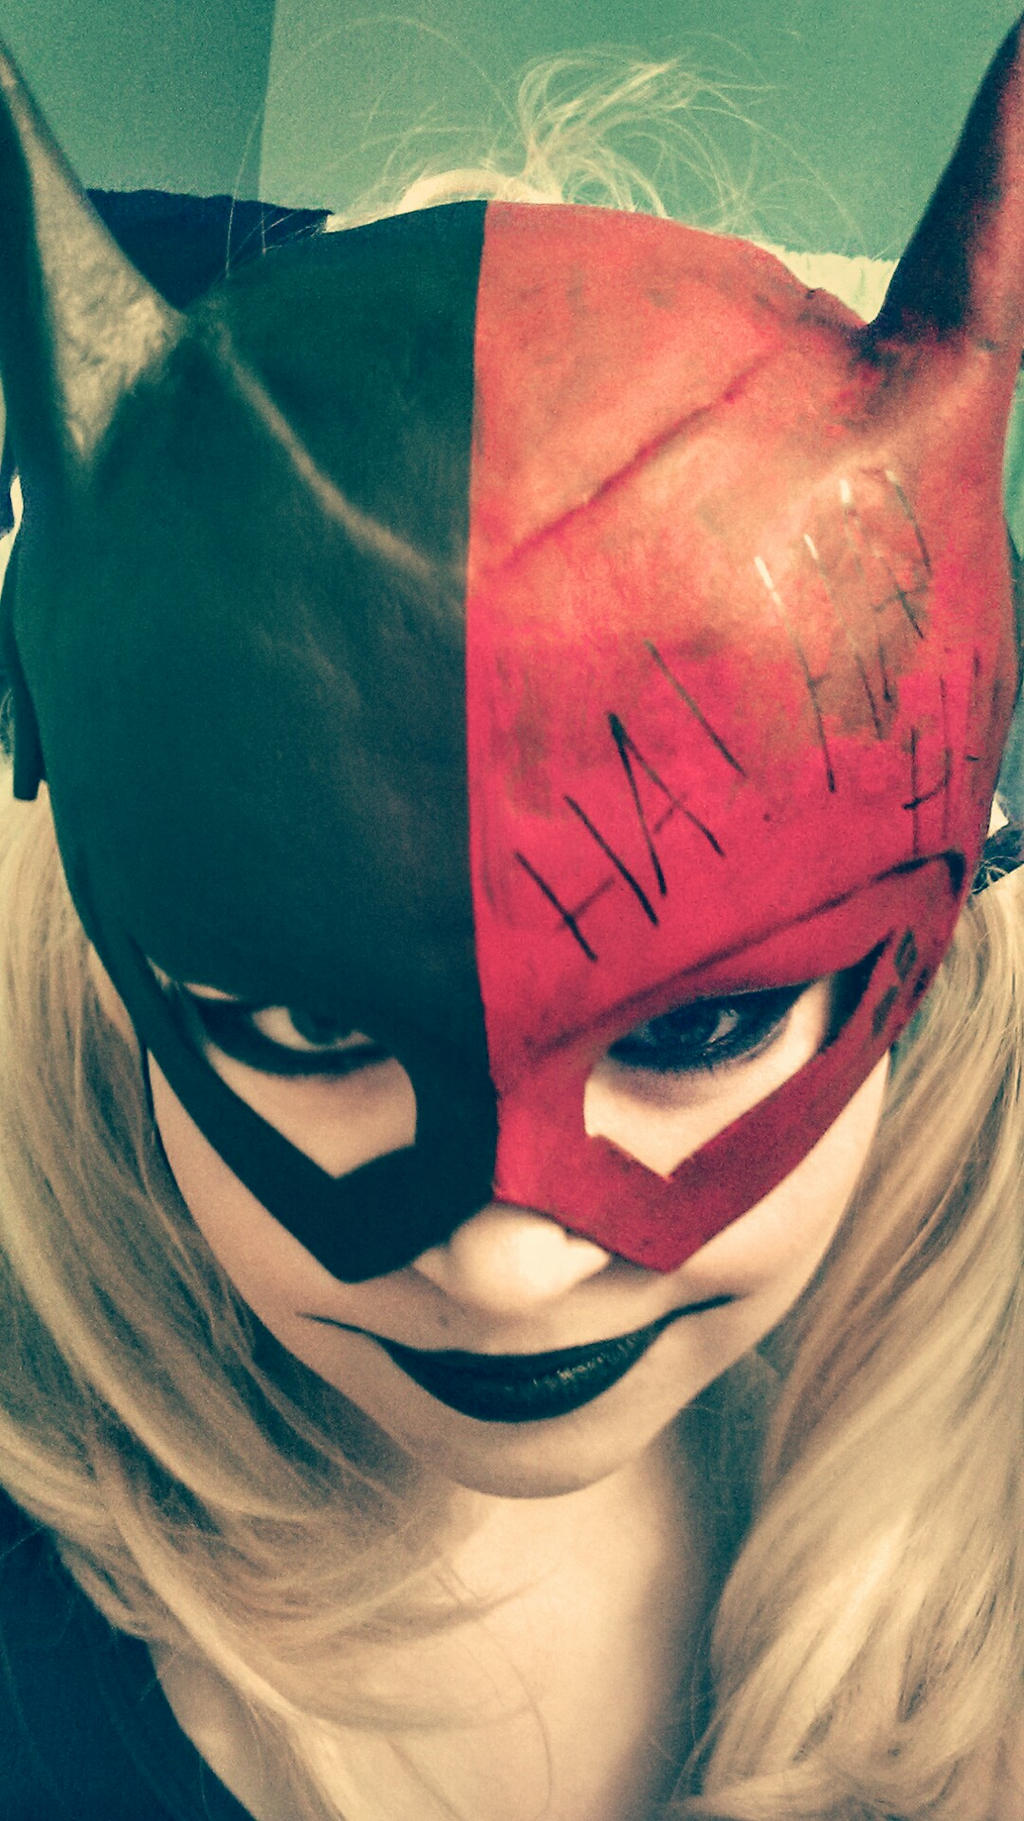 Stealing Batgirl's Costume? Naughty Harley!